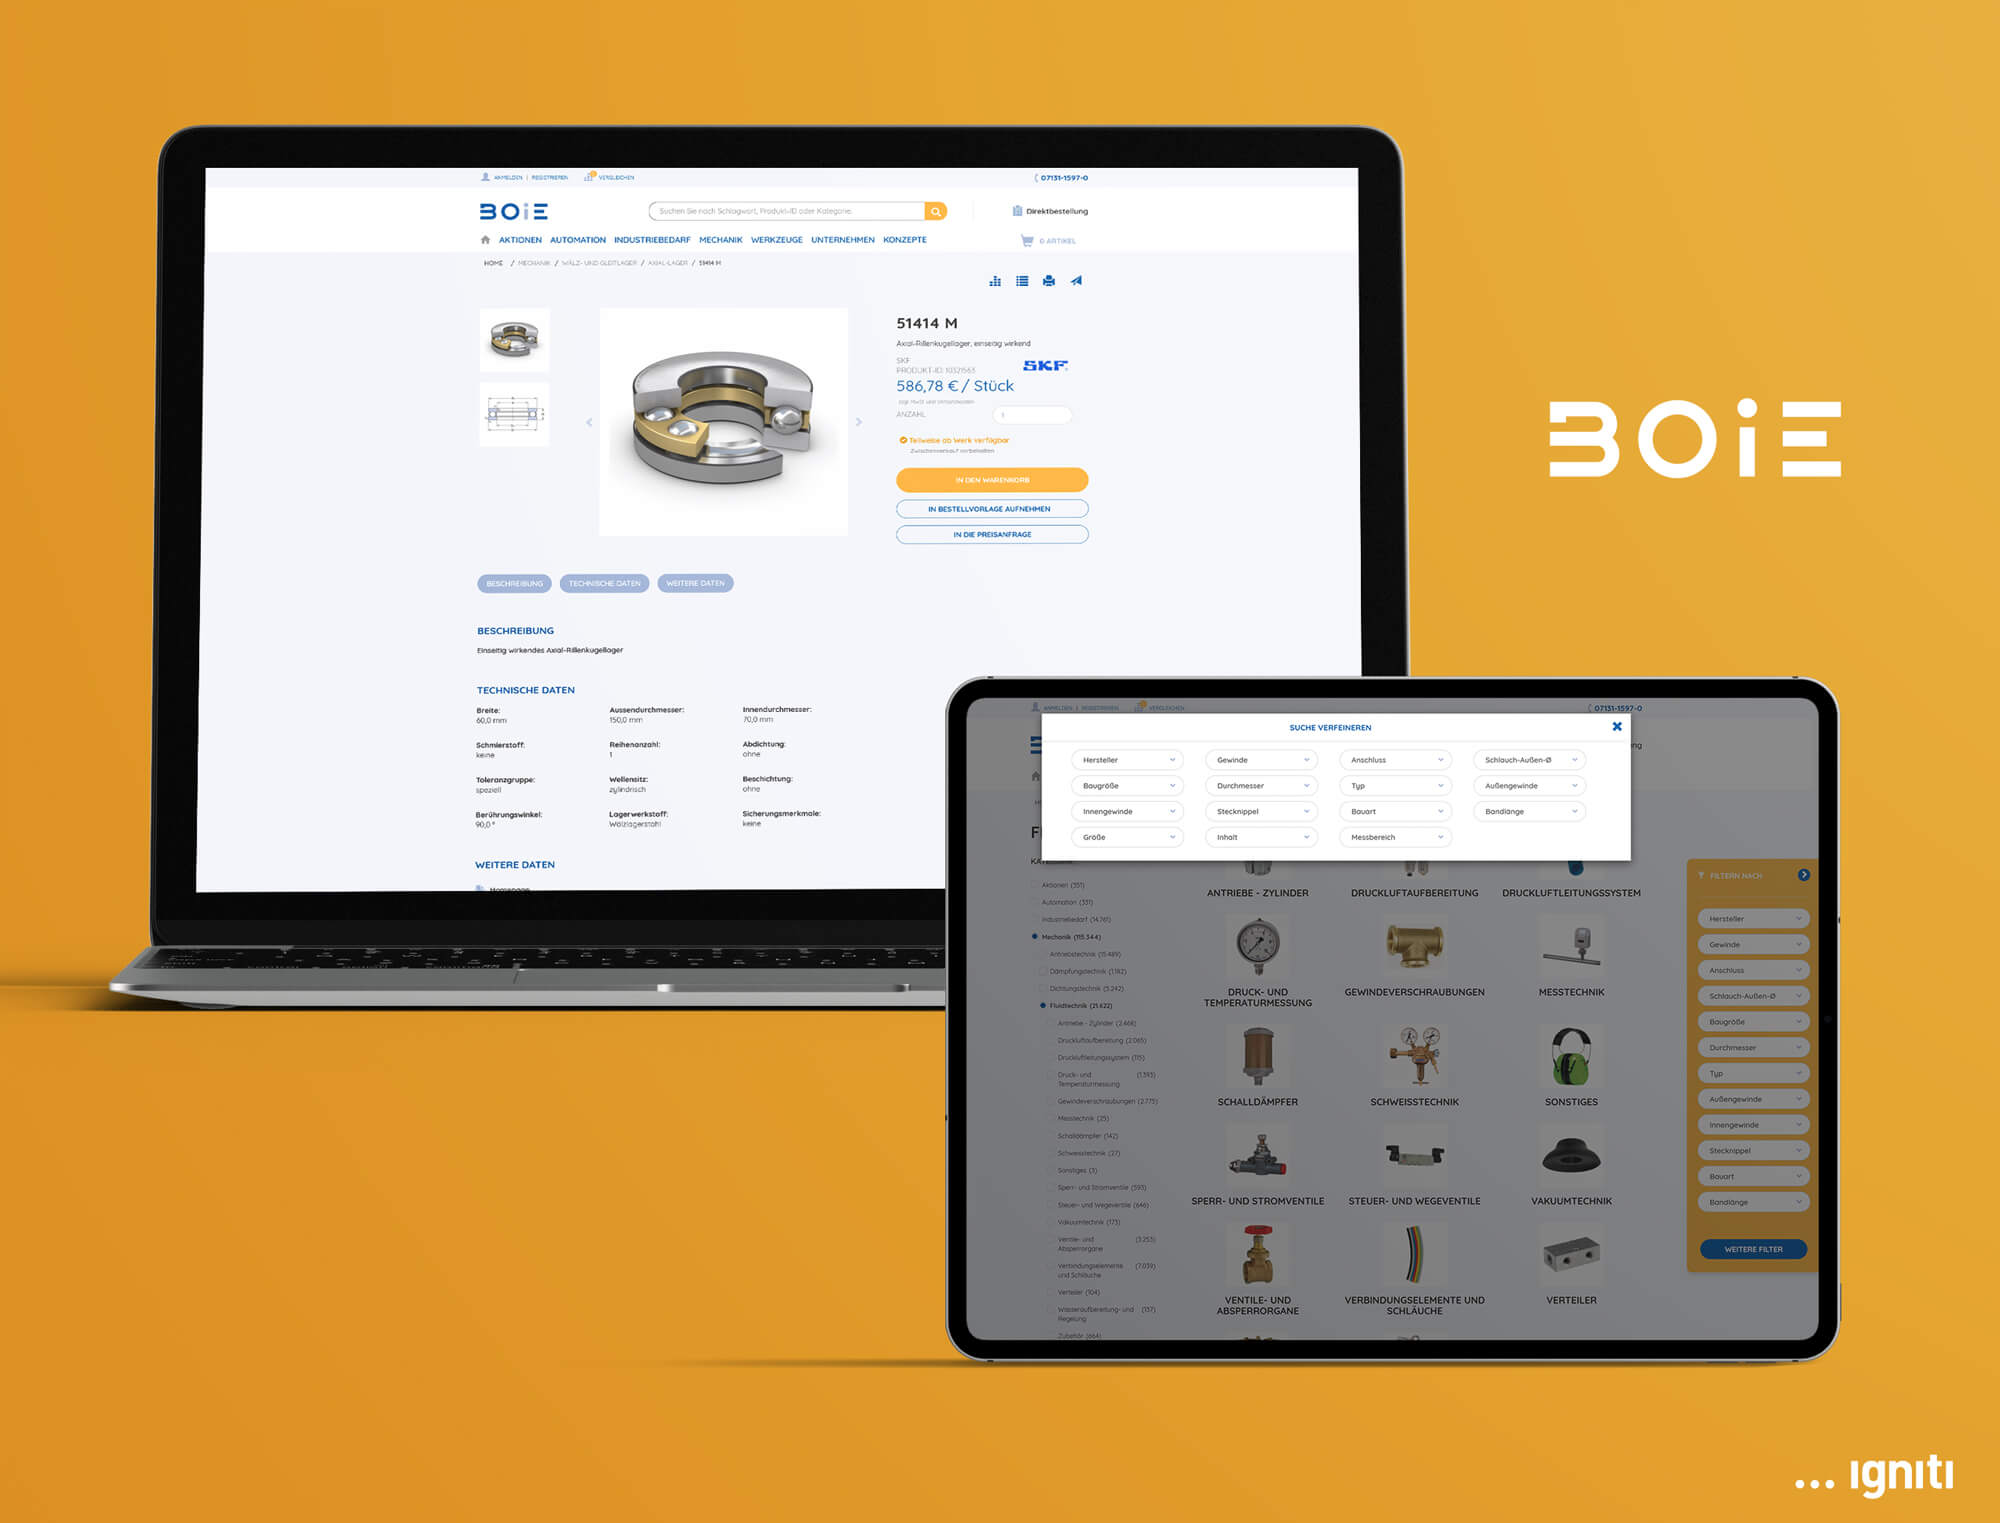 Boie UI design success story